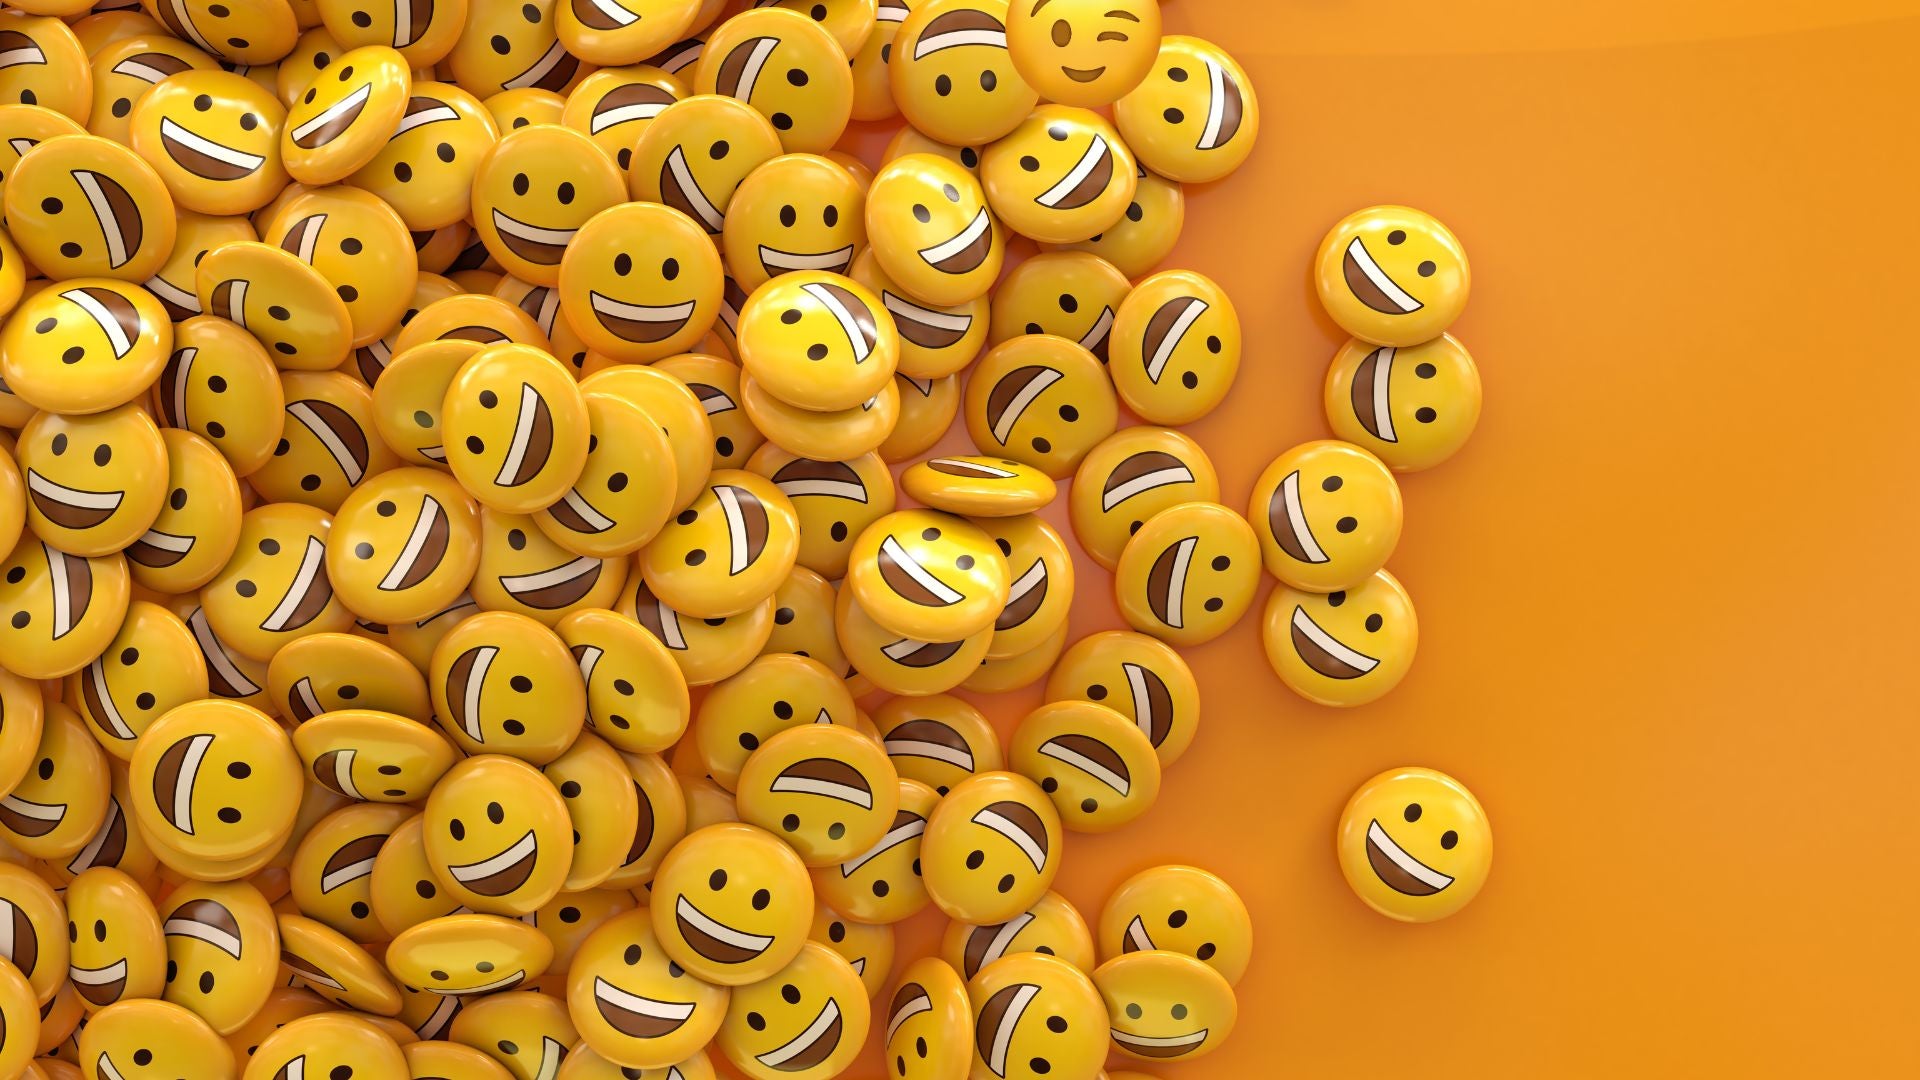 Happy faces, smiling emojis -- underscoring Ready Player N's vision of making life infinitely more fun